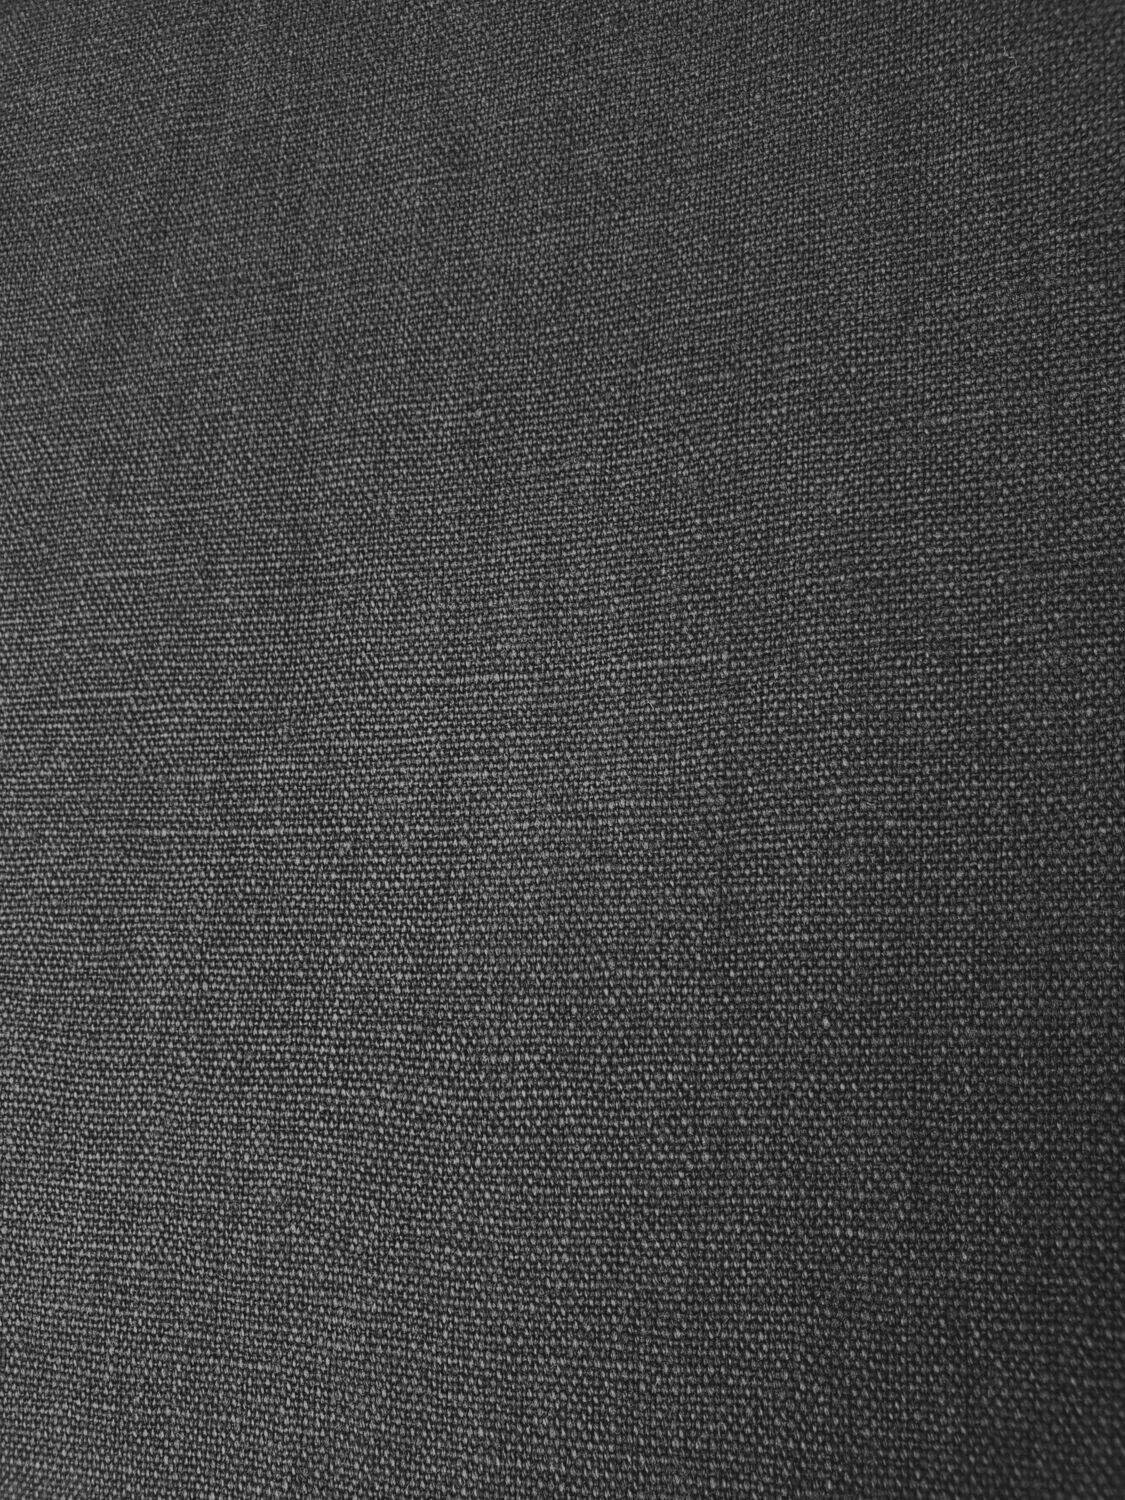 (CLOSE OUT) Heirloom Romanian Black Soft Hemp Canvas , 100% Hemp , 15oz , 57/58" width